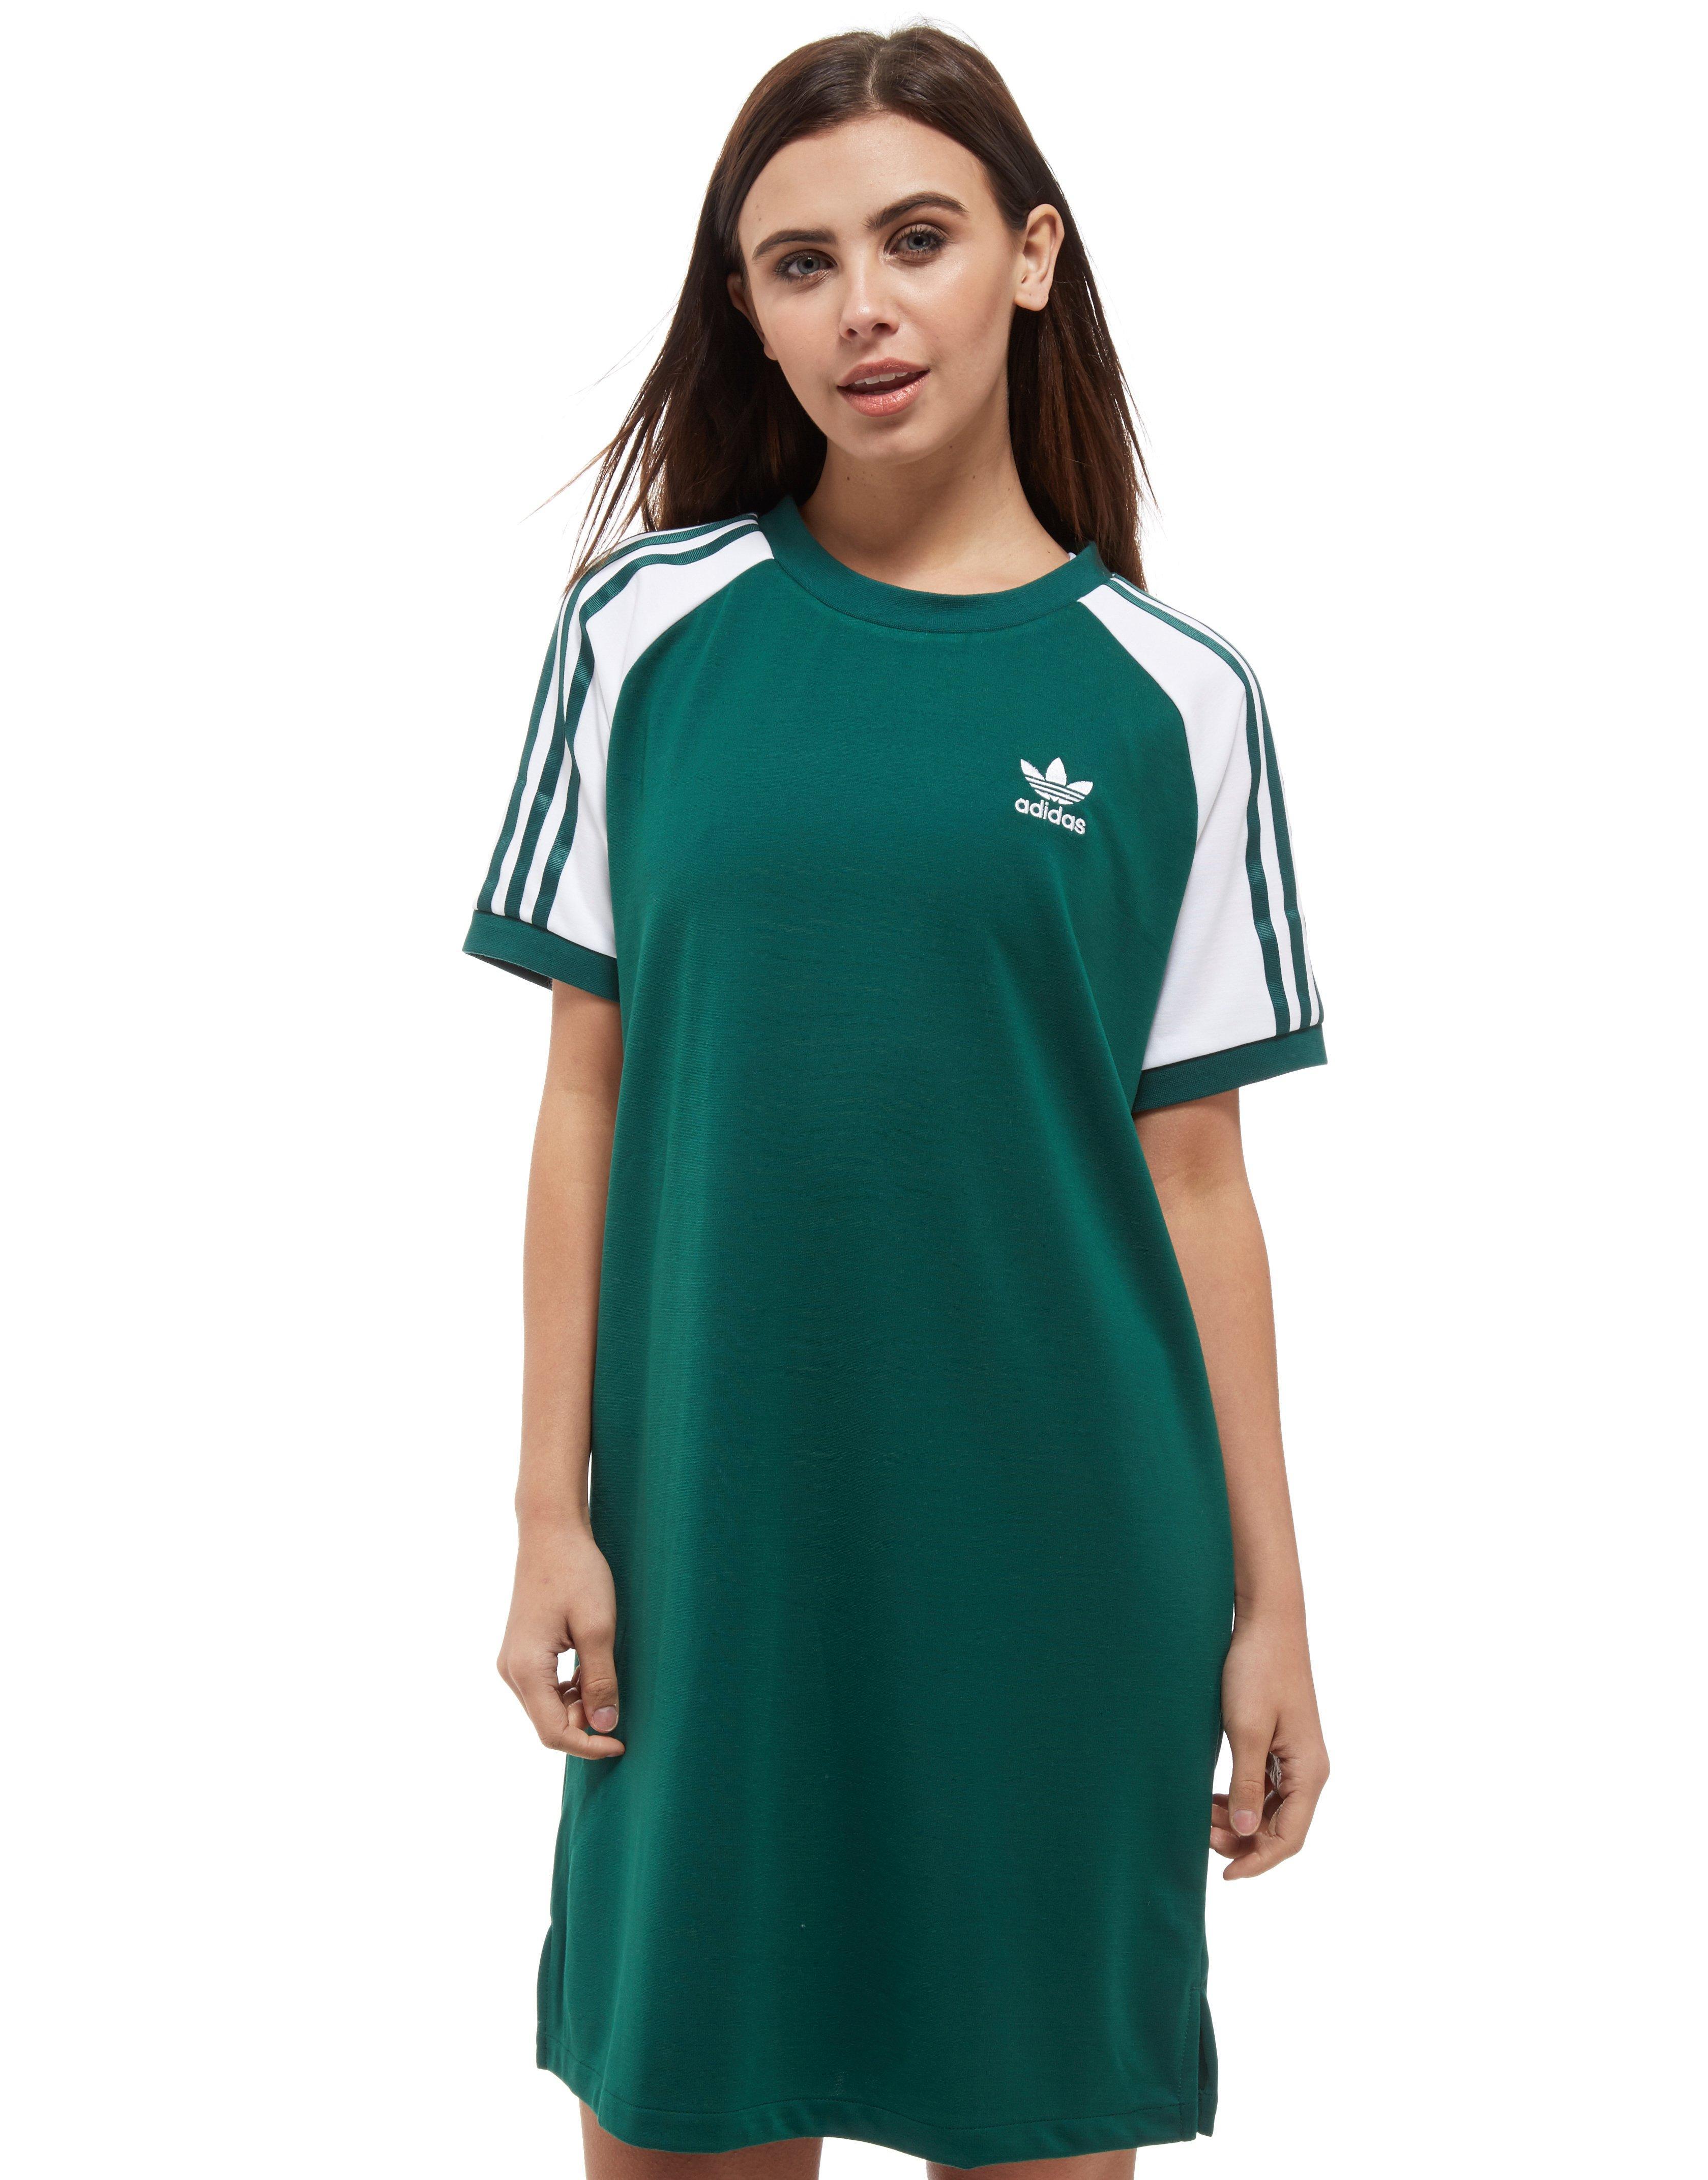 Adidas Originals Cotton Raglan Dress Collegiate Green Women S